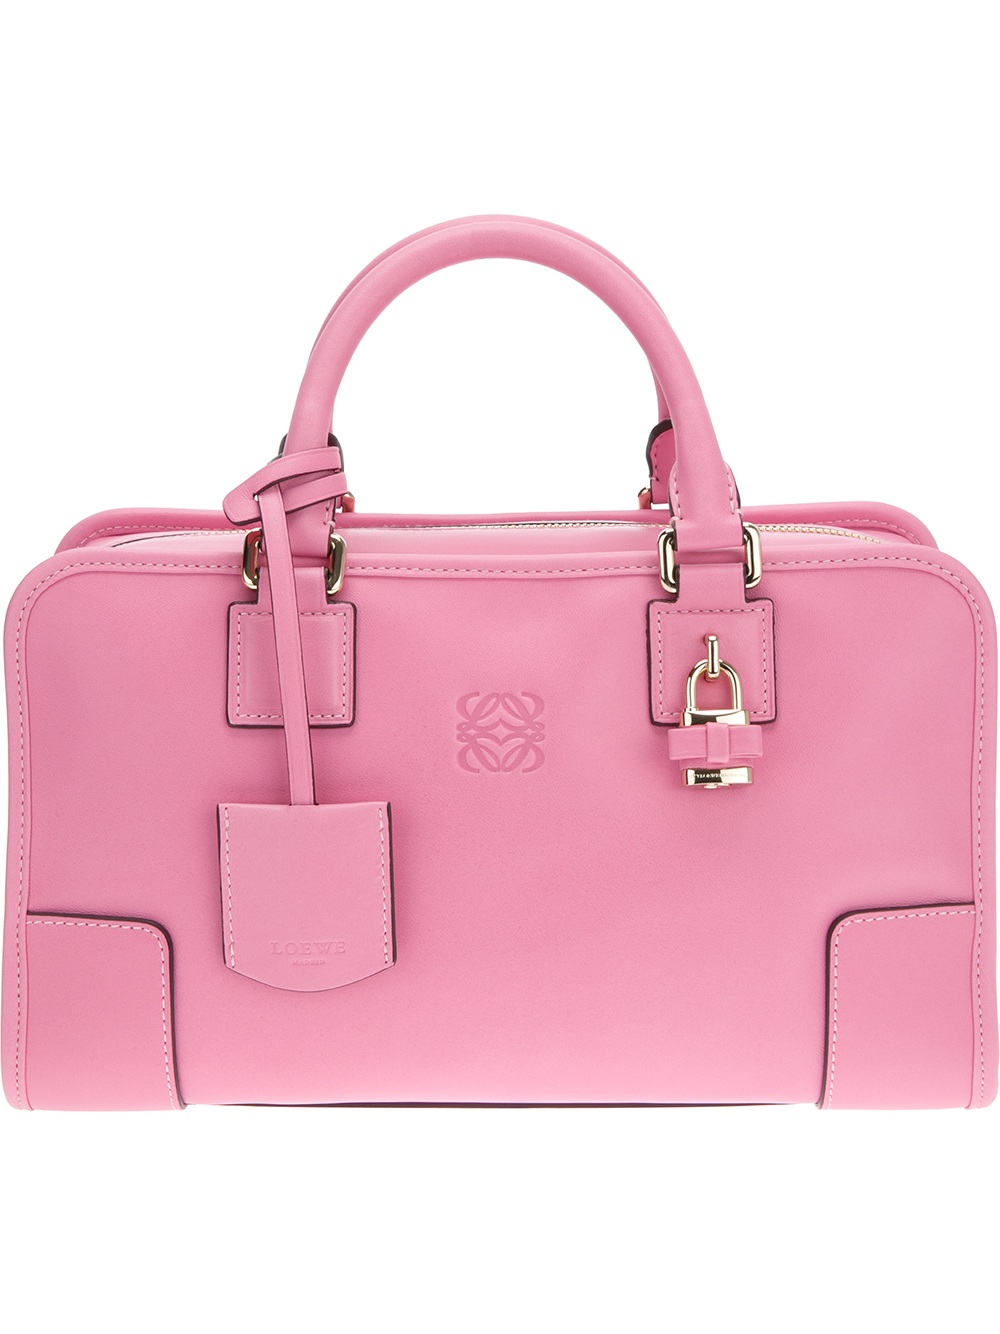 Loewe Amazon Handbag in Pink - Lyst